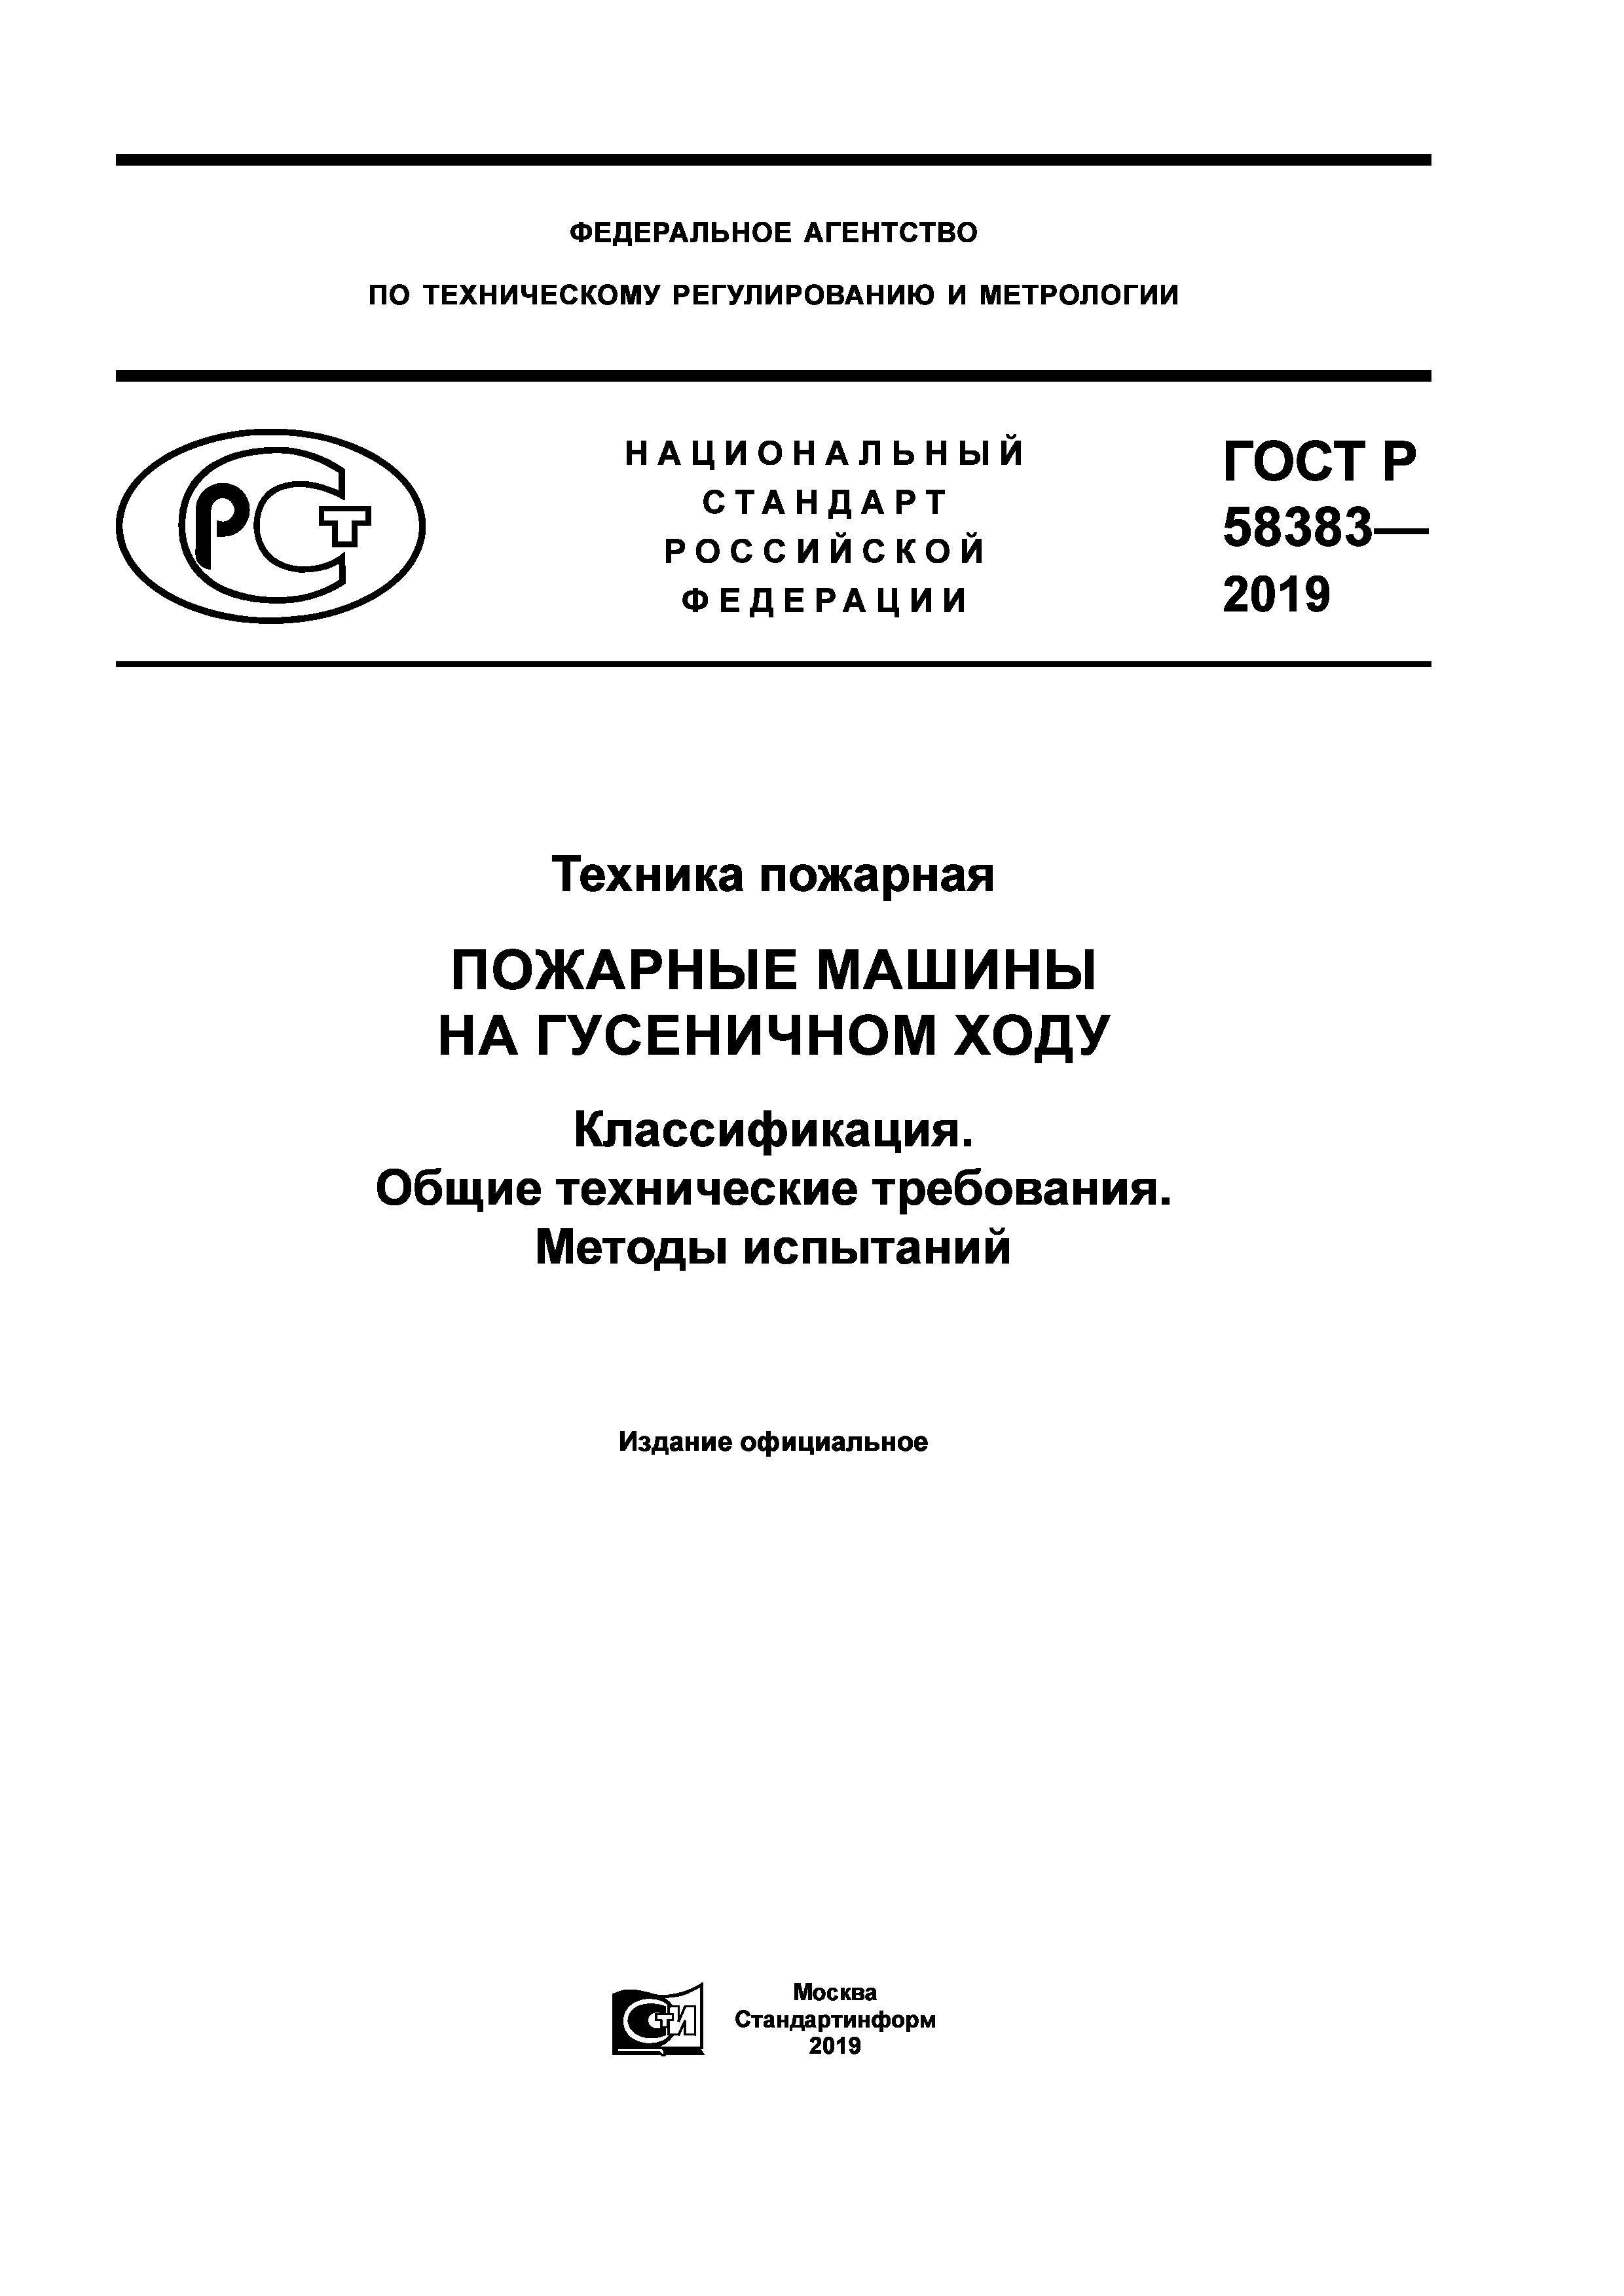 ГОСТ Р 58383-2019